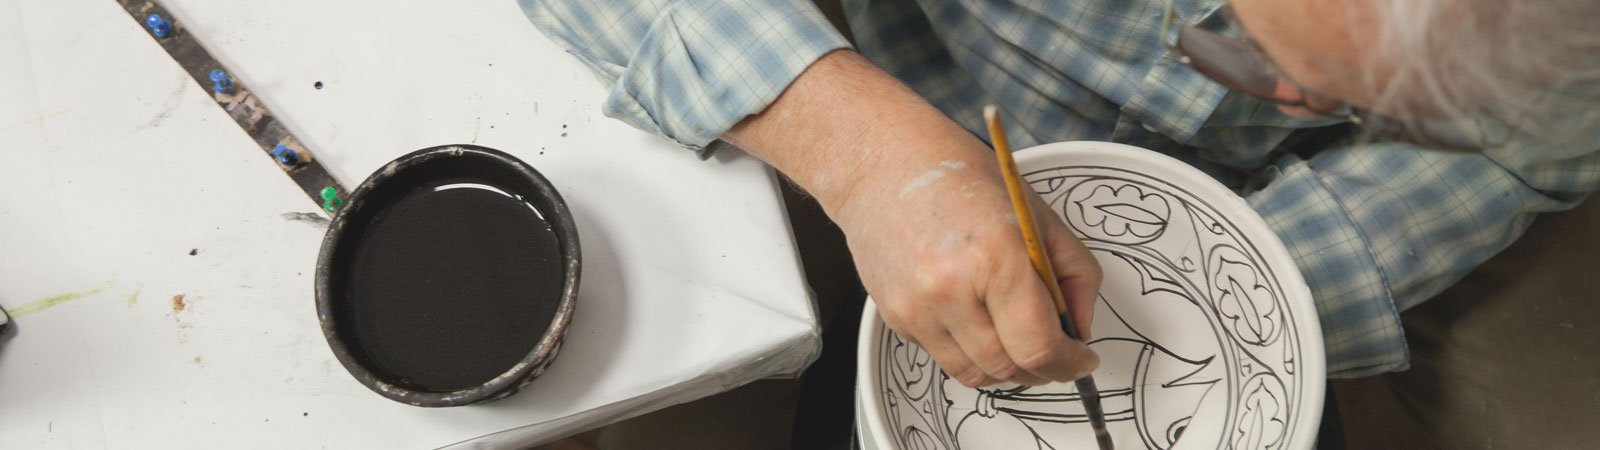 Creativity Man Painting Bowl